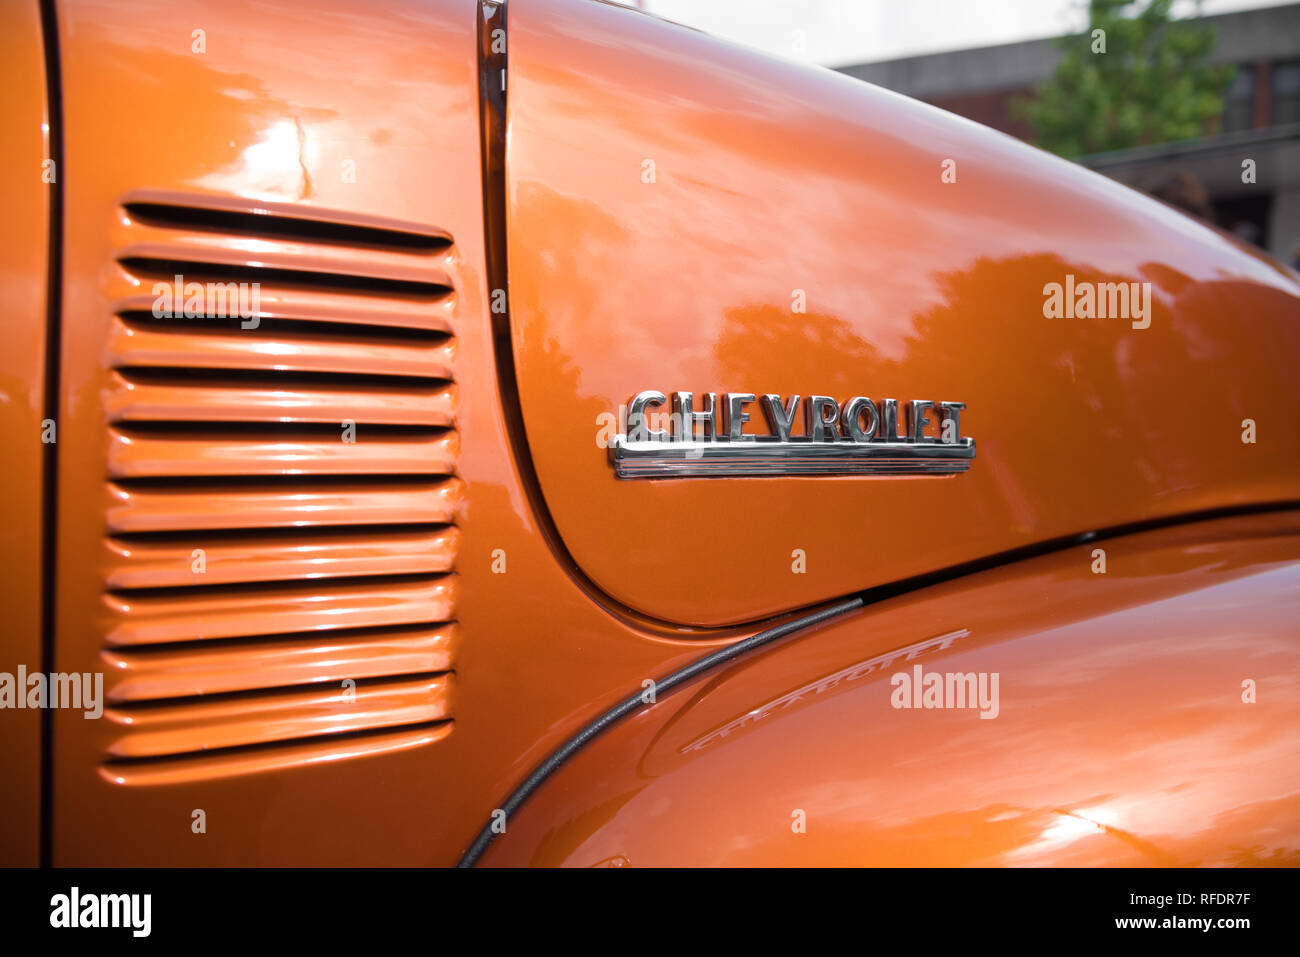 NIJVERDAL, NETHERLANDS - SEPTEMBER 17, 2017: Closeup of a chevrolet logo on an orange brown oldtimer car. Stock Photo